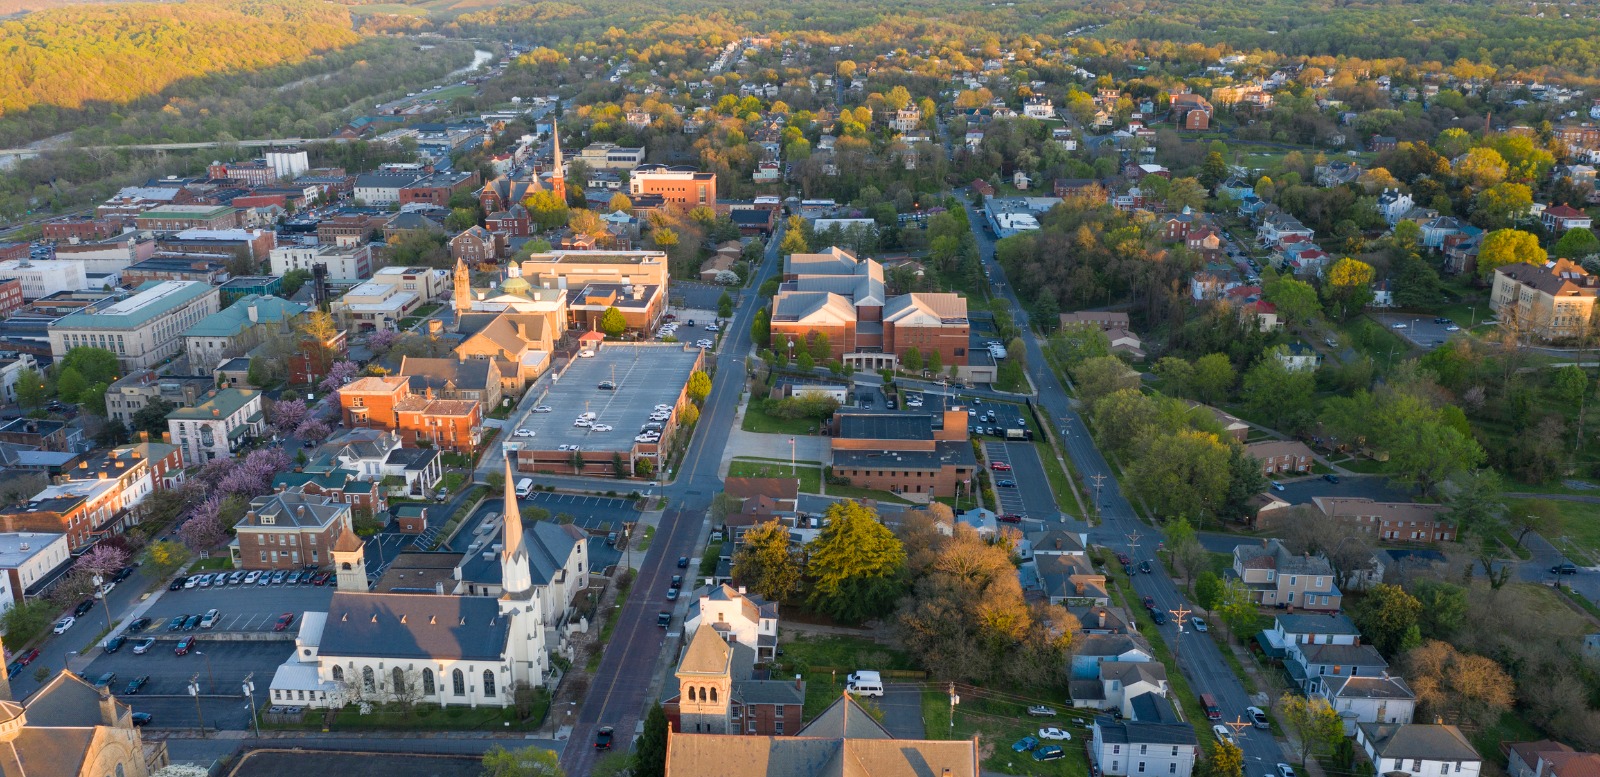 Aerial view of Downtown Lynchburg, VA